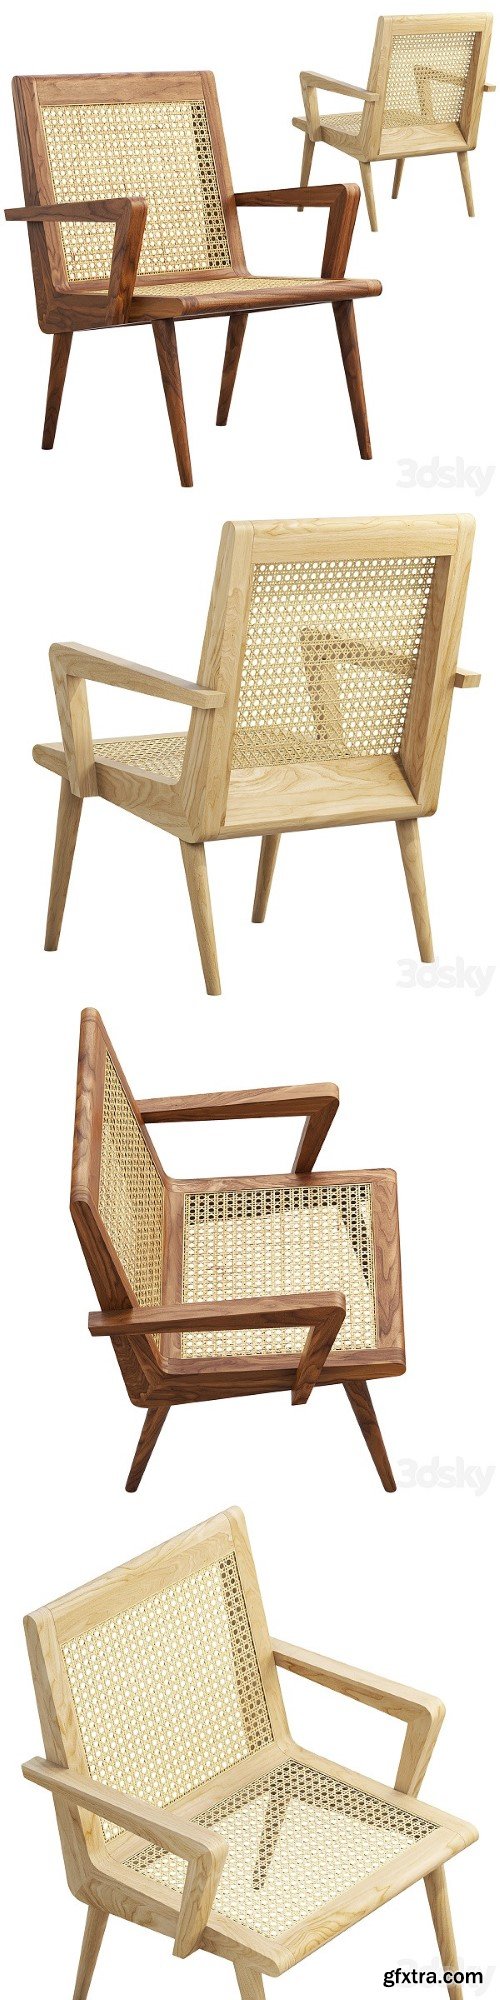 Mid Century Cane Chair